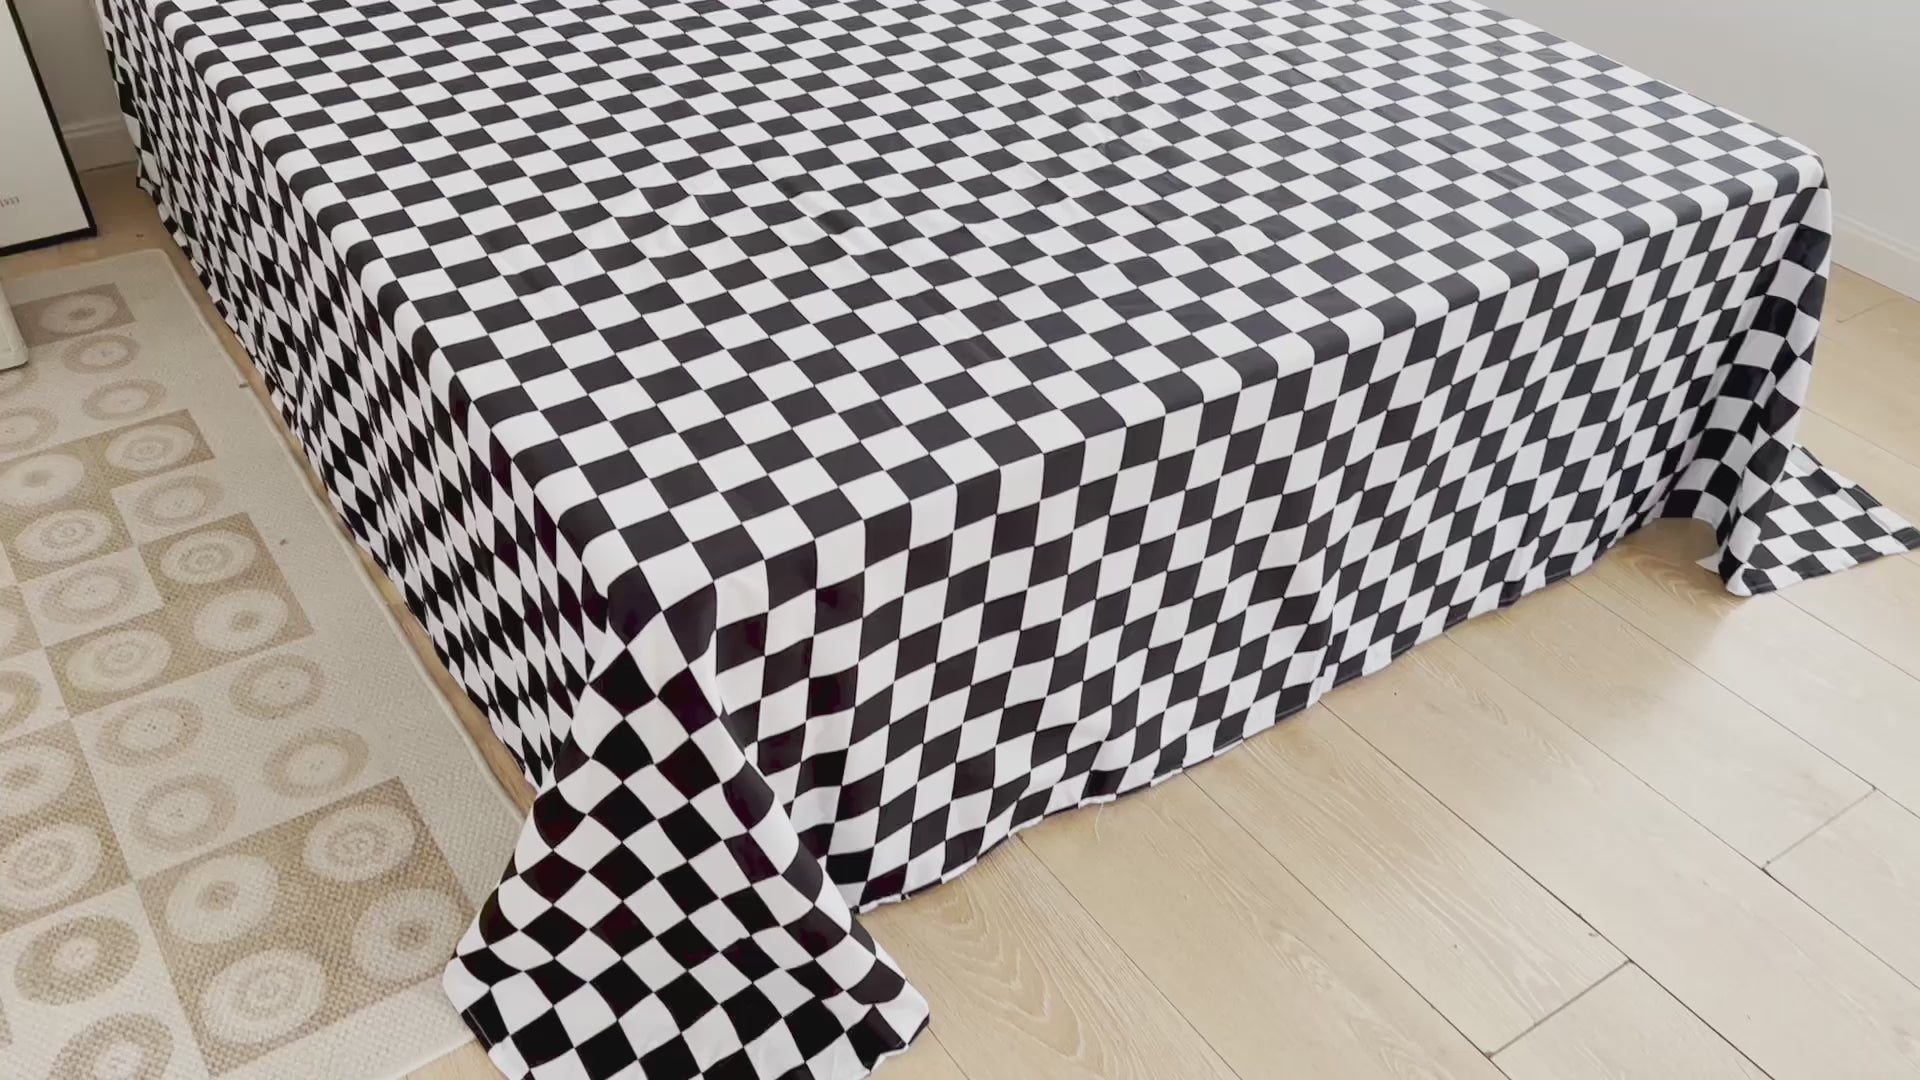 3 Pieces bedsheet set, Black Color Checkered Design